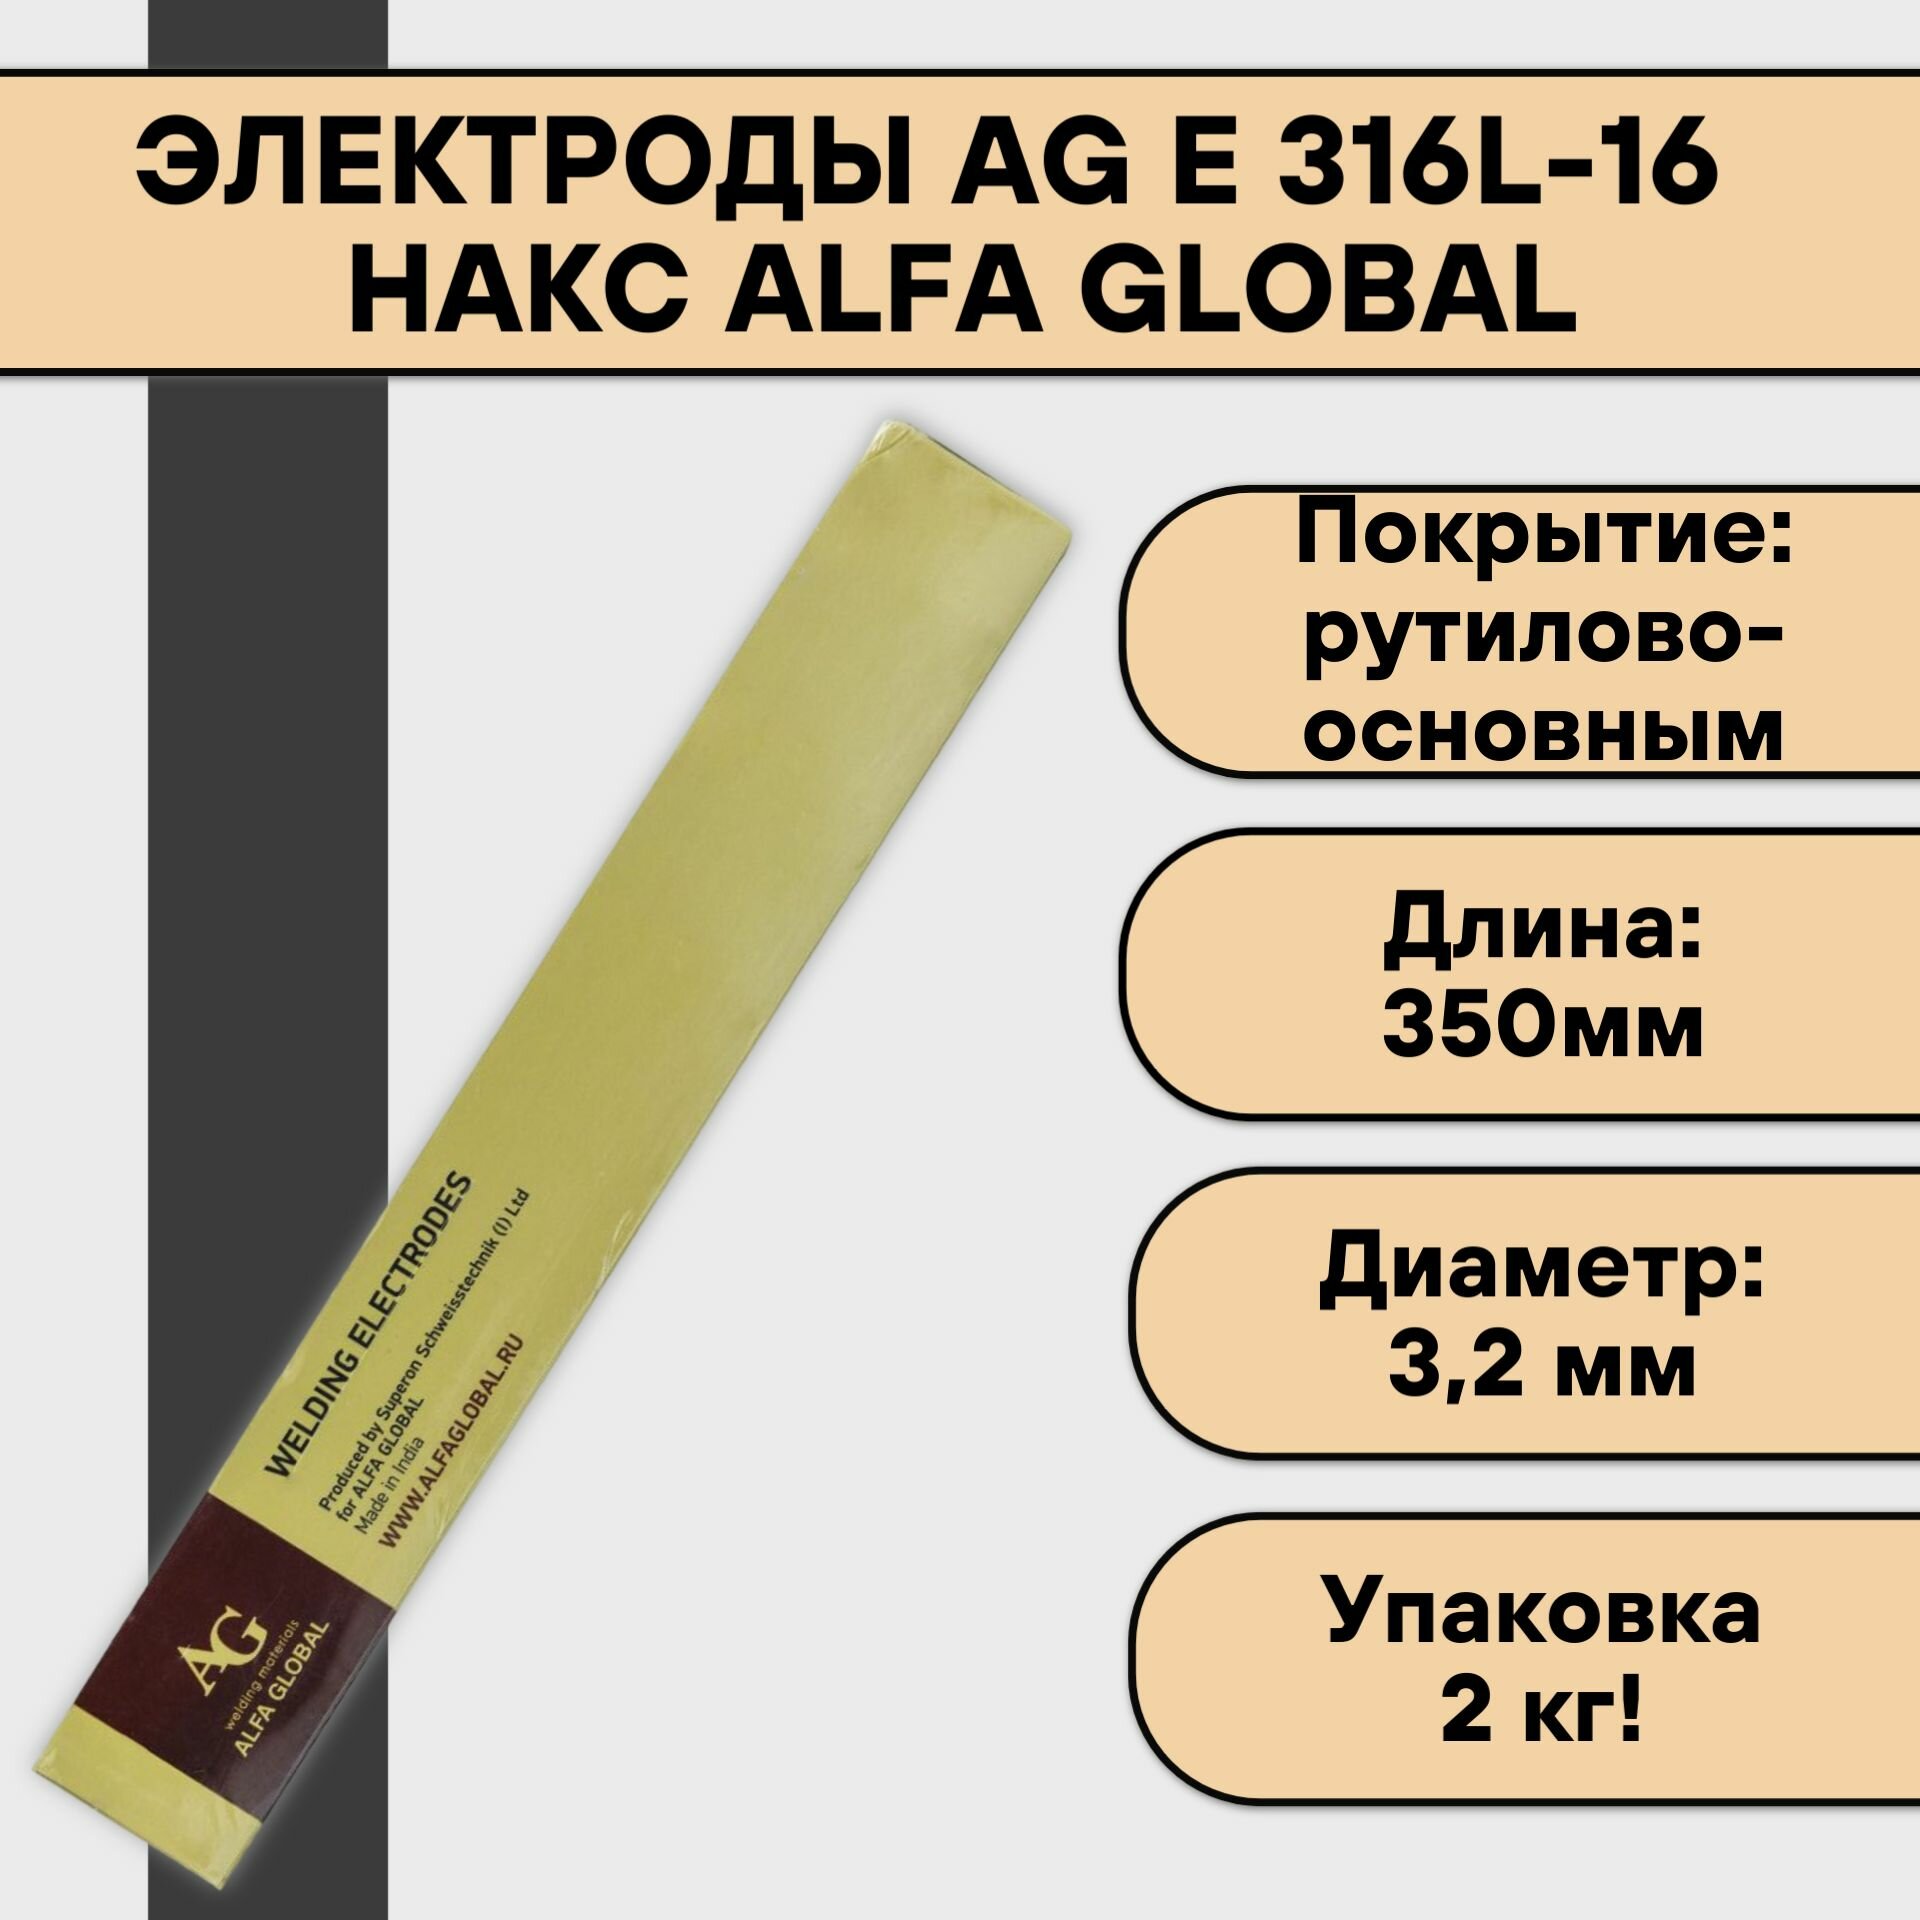 Электроды AG E 316L-16 ф 32х350мм (2 кг) НАКС Alfa Global